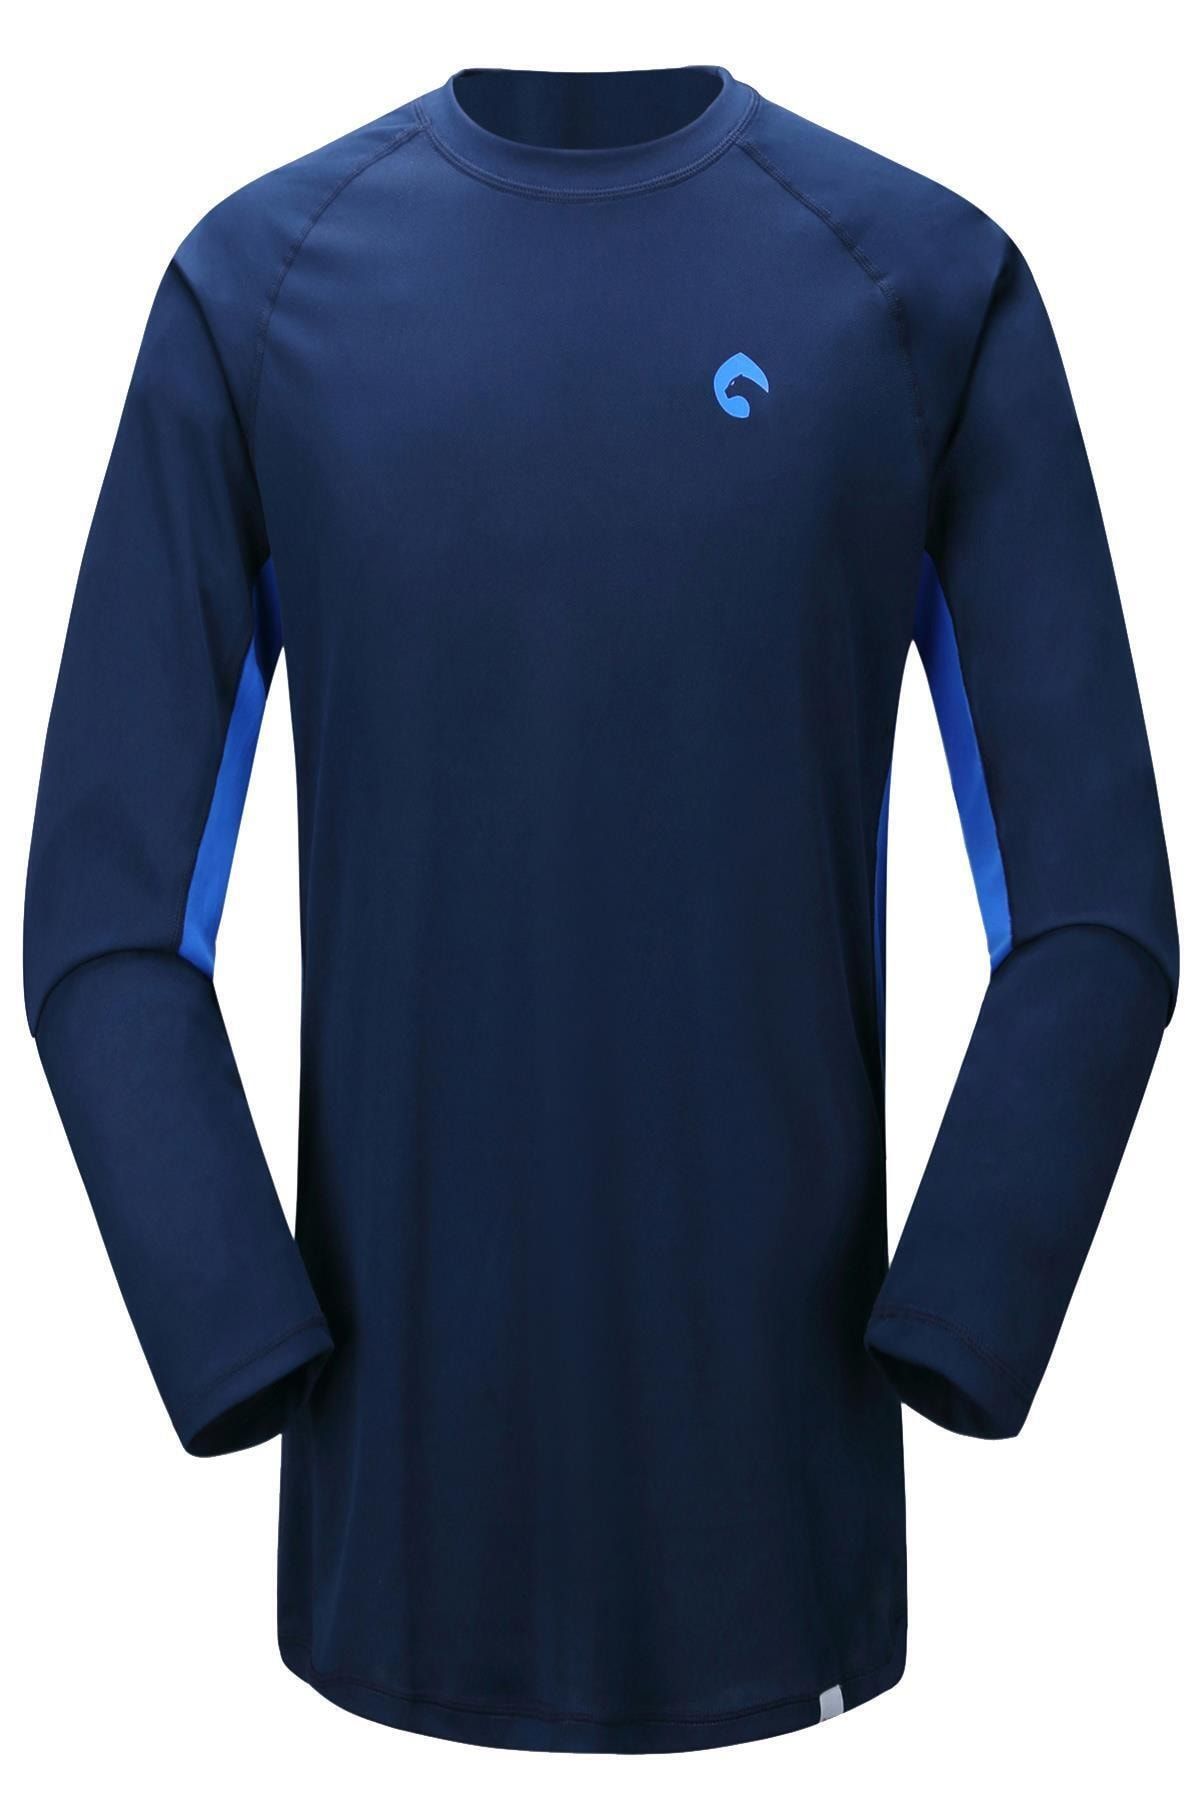 Kivu Erkek T-shirt Lacivert/mavi